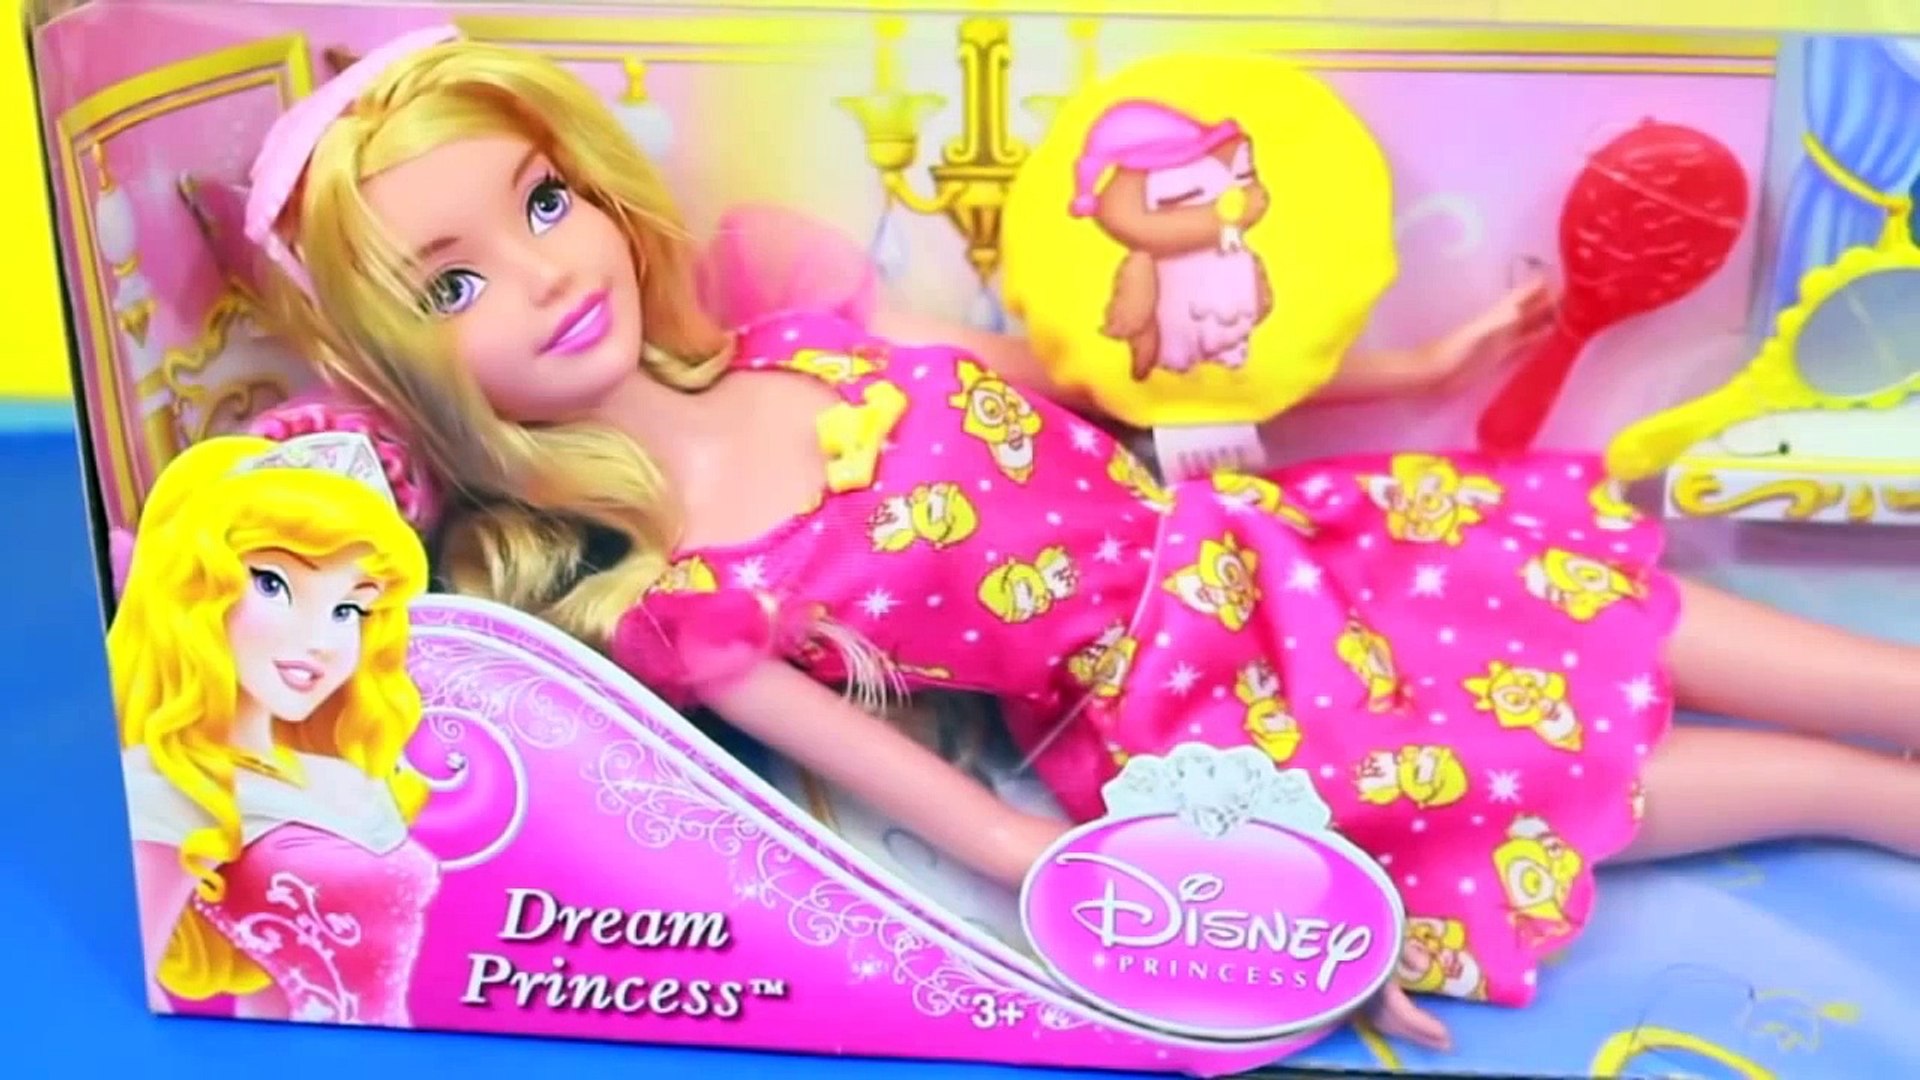 Details about   Disney Dream Princess Sleeping Beauty Mattel Doll Barbie size Bedtime Dreams Toy